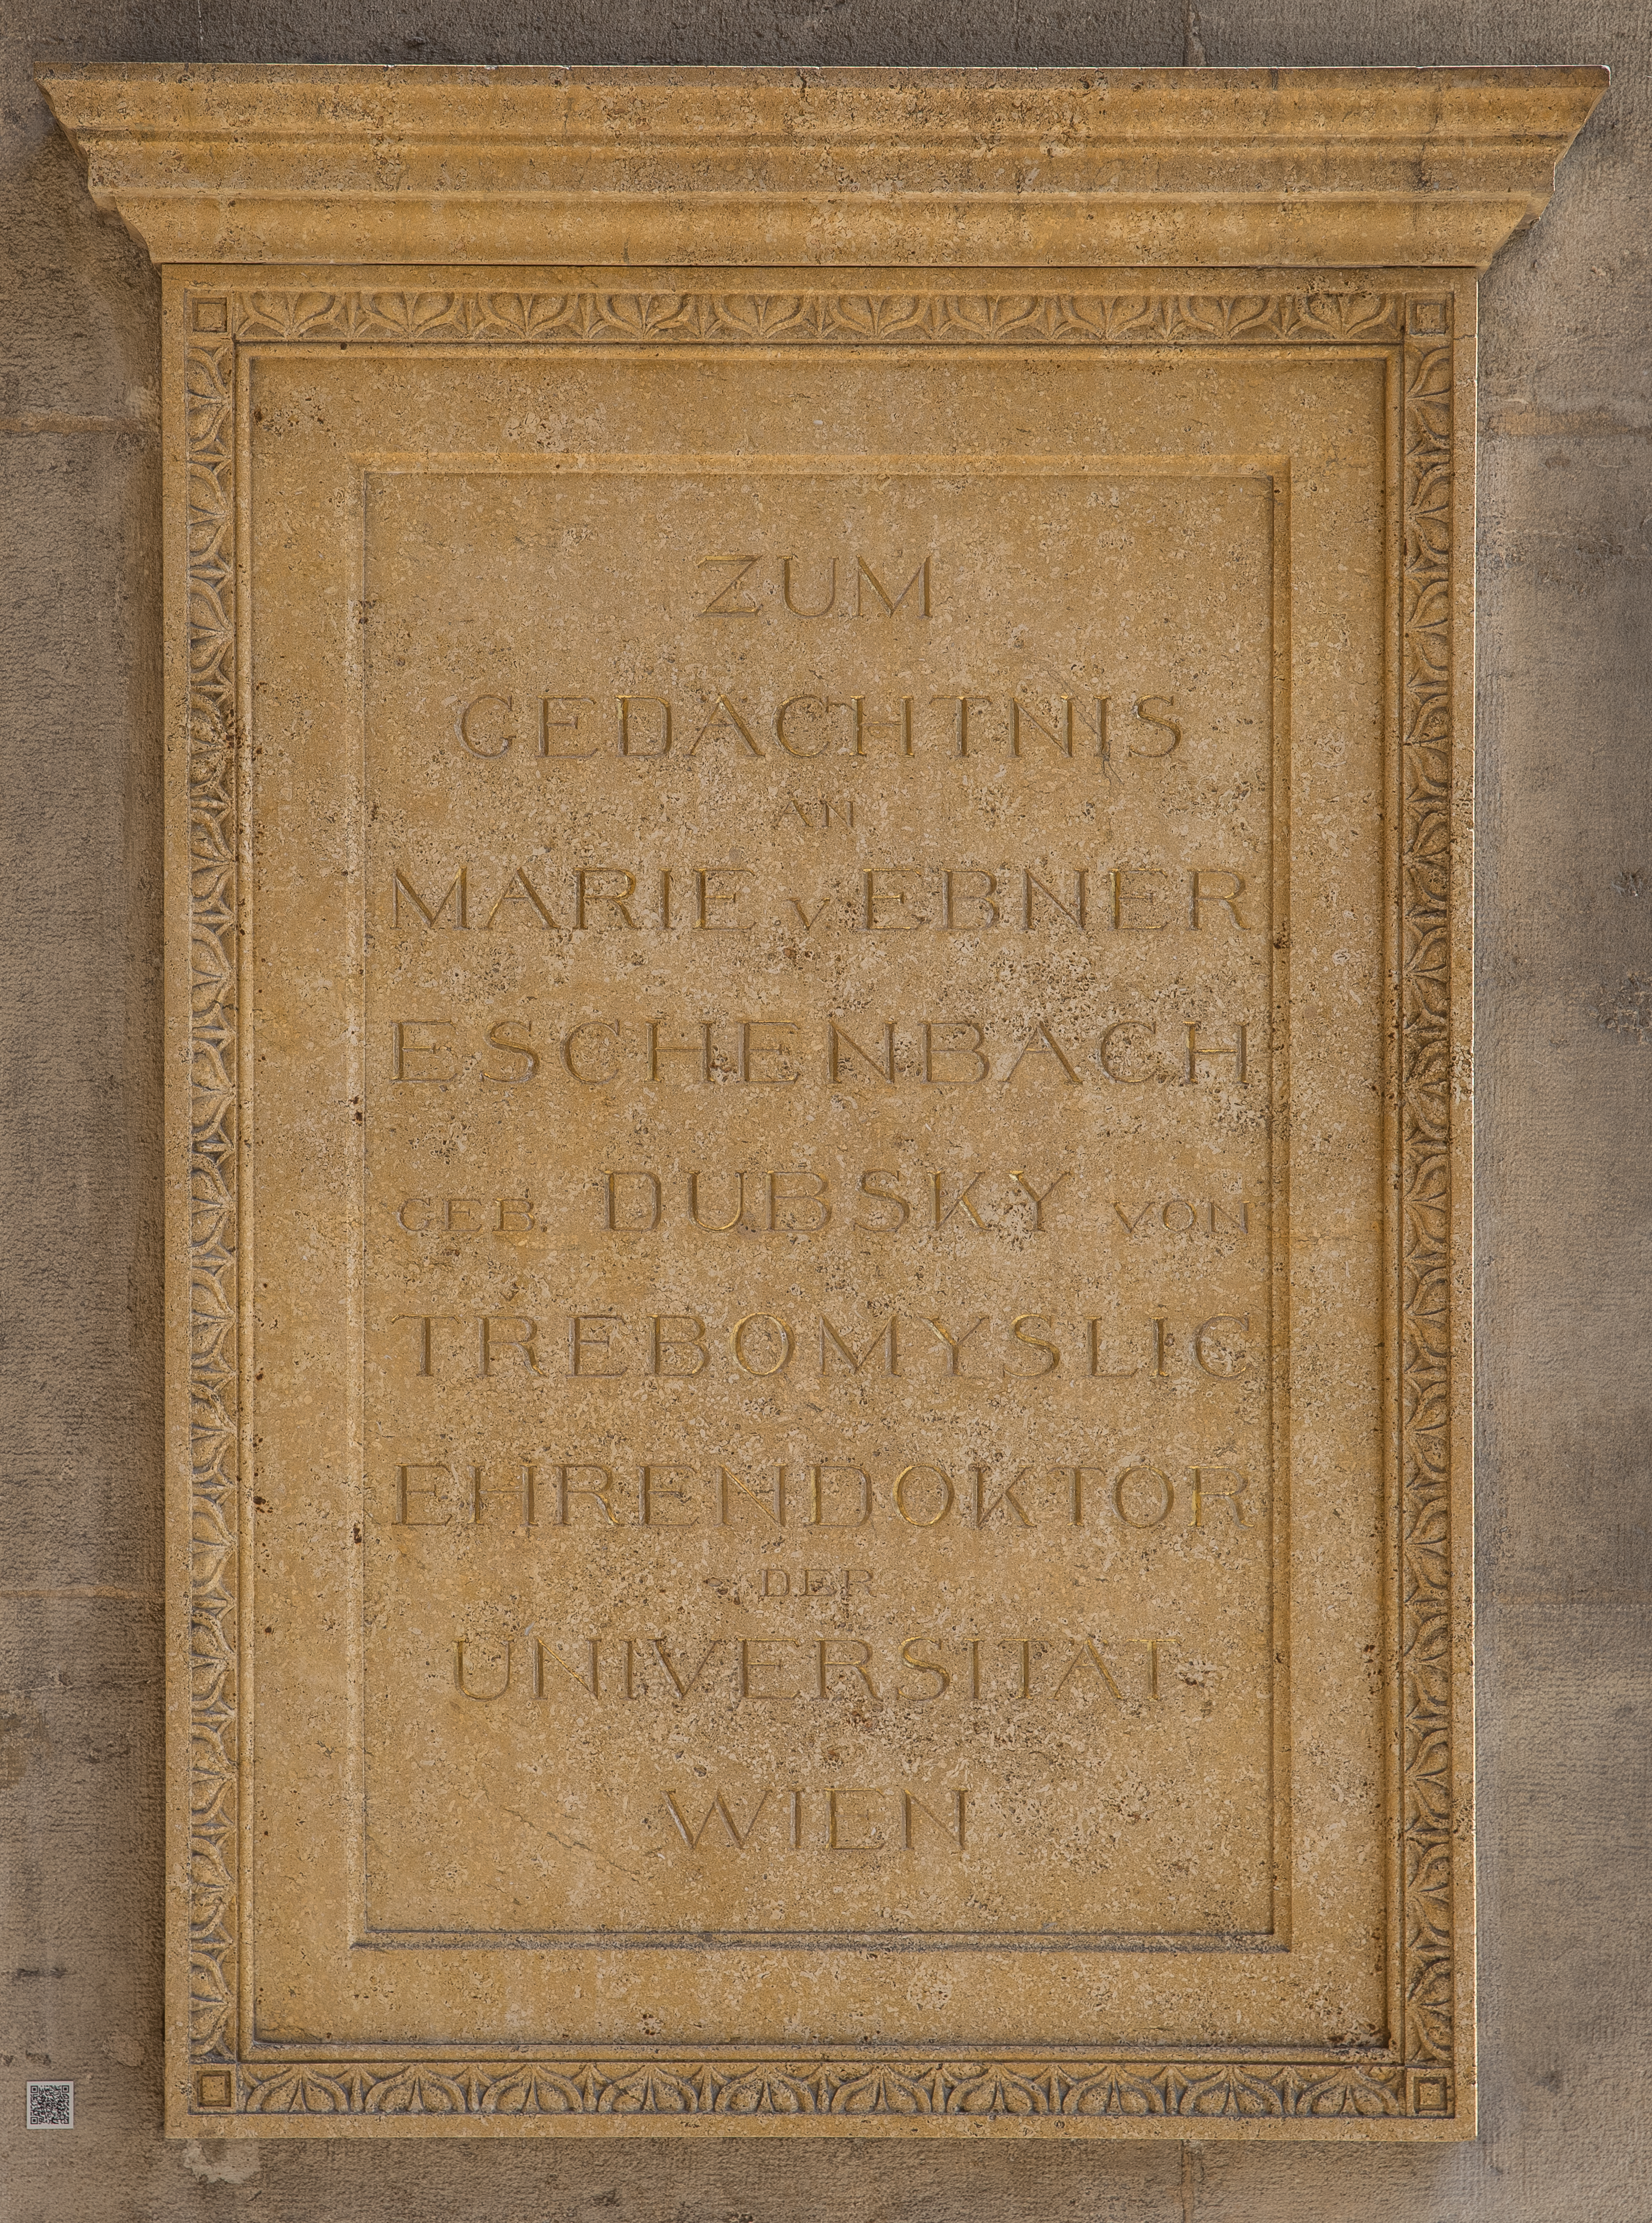 Marie von Ebner-Eschenbach (1830-1916), Writer, Nr. 133, commemorative plaque (marble) in the Arkadenhof of the University of Vienna-3191-HDR